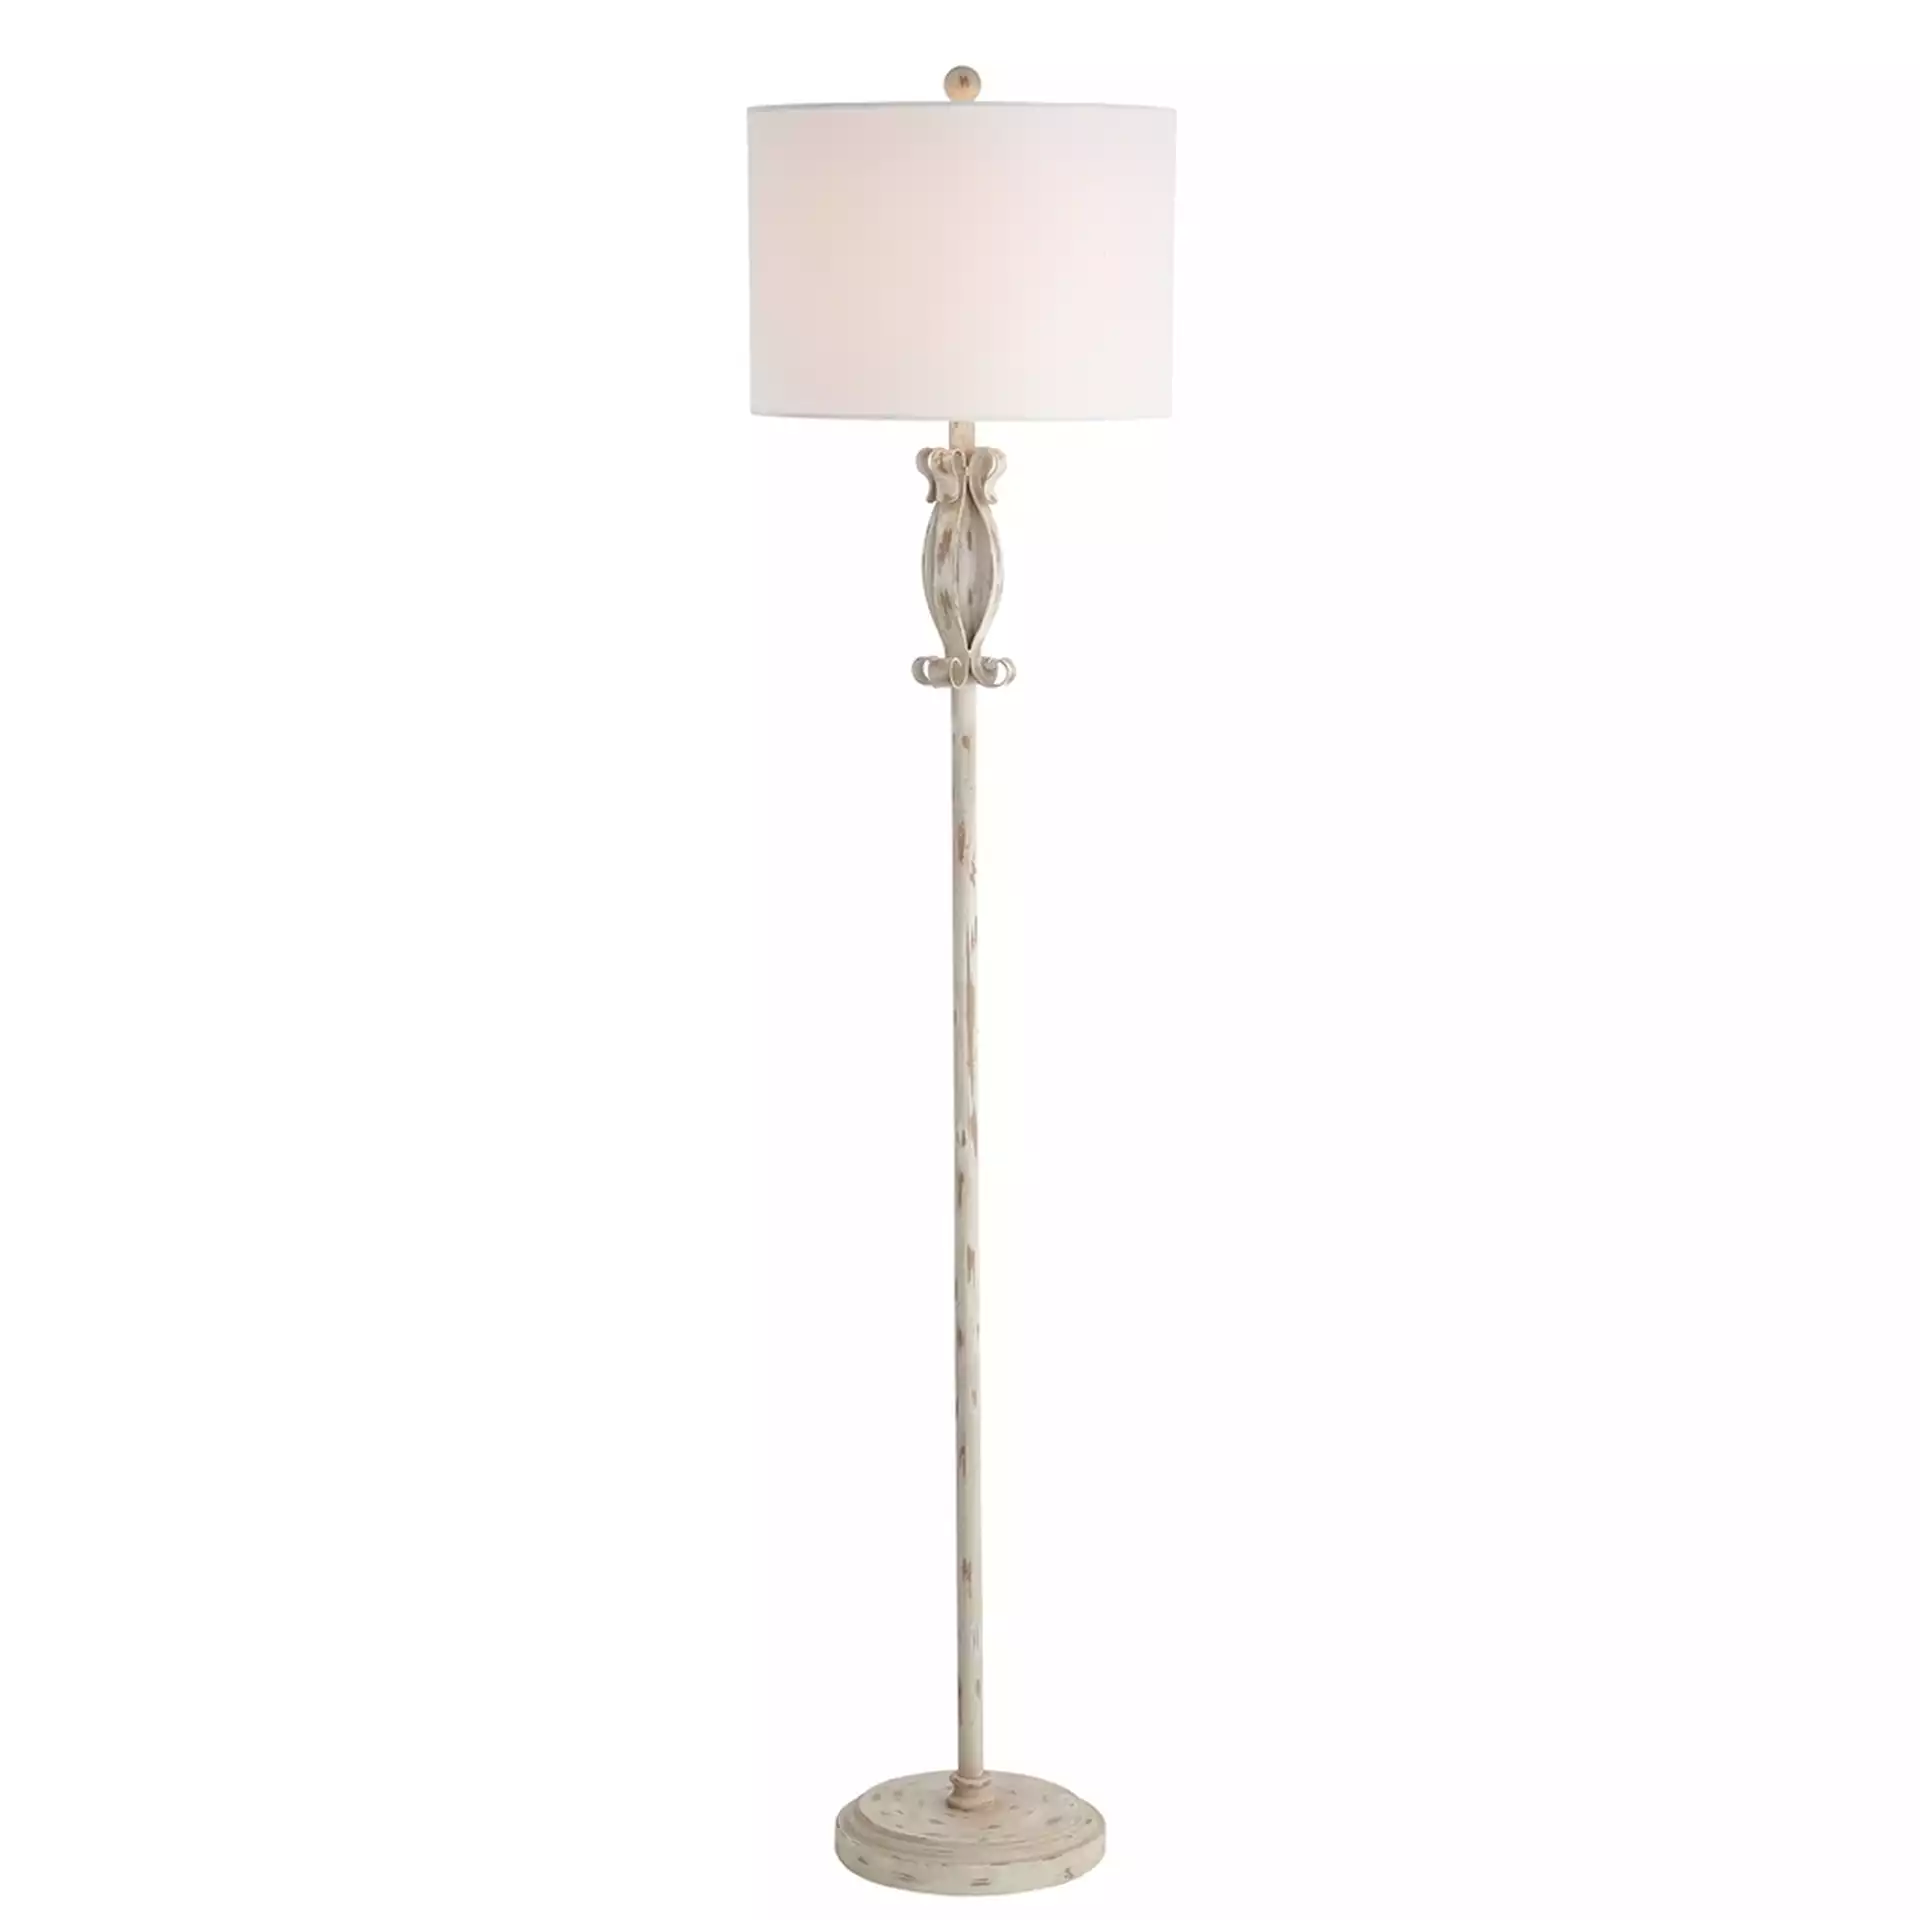 Philippa Floor Lamp, Whitewashed, 61"